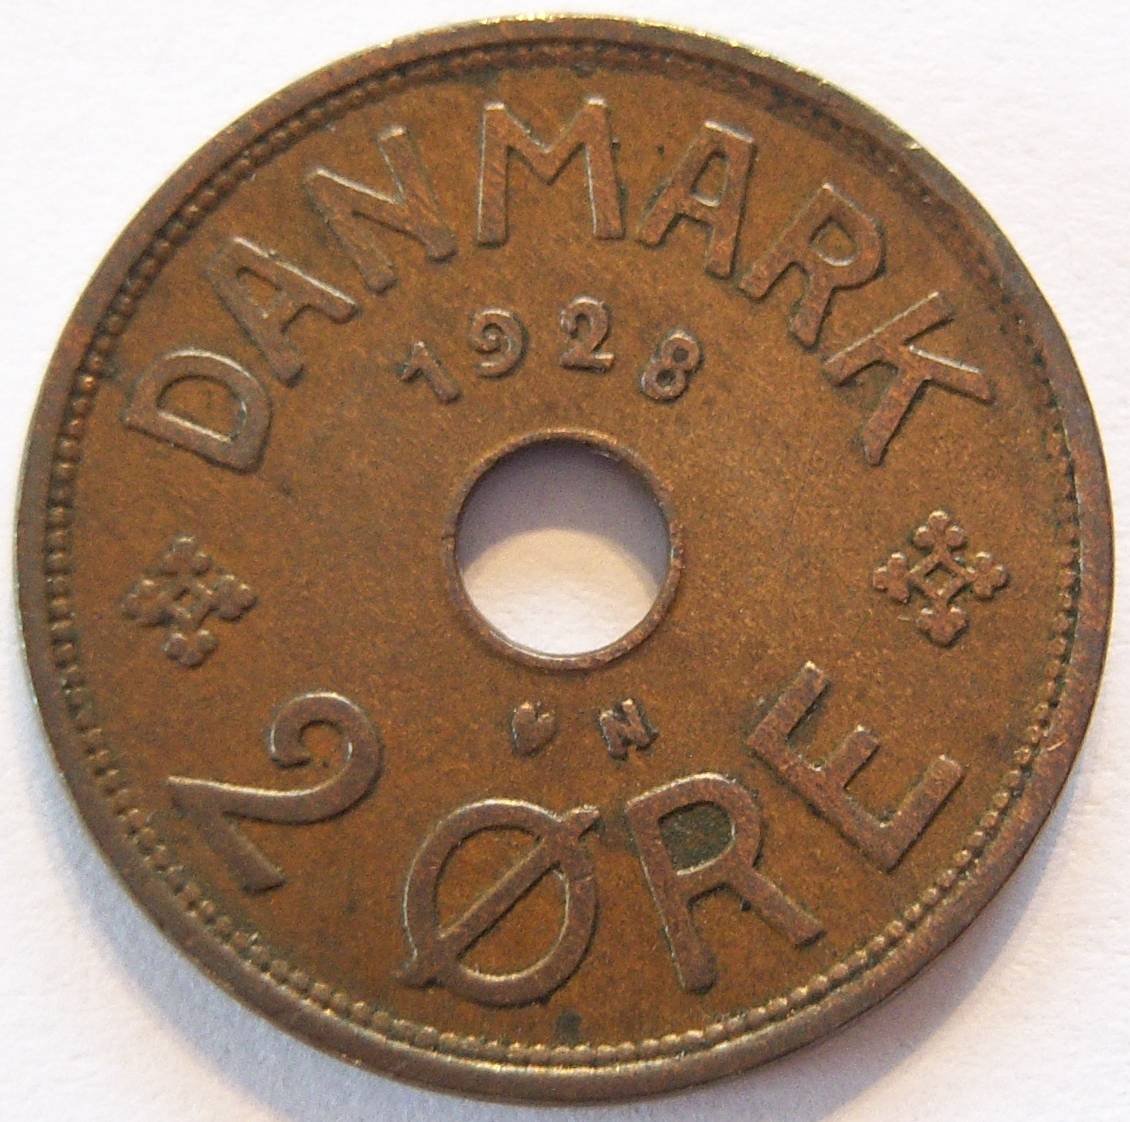  Dänemark 2 Öre 1928   